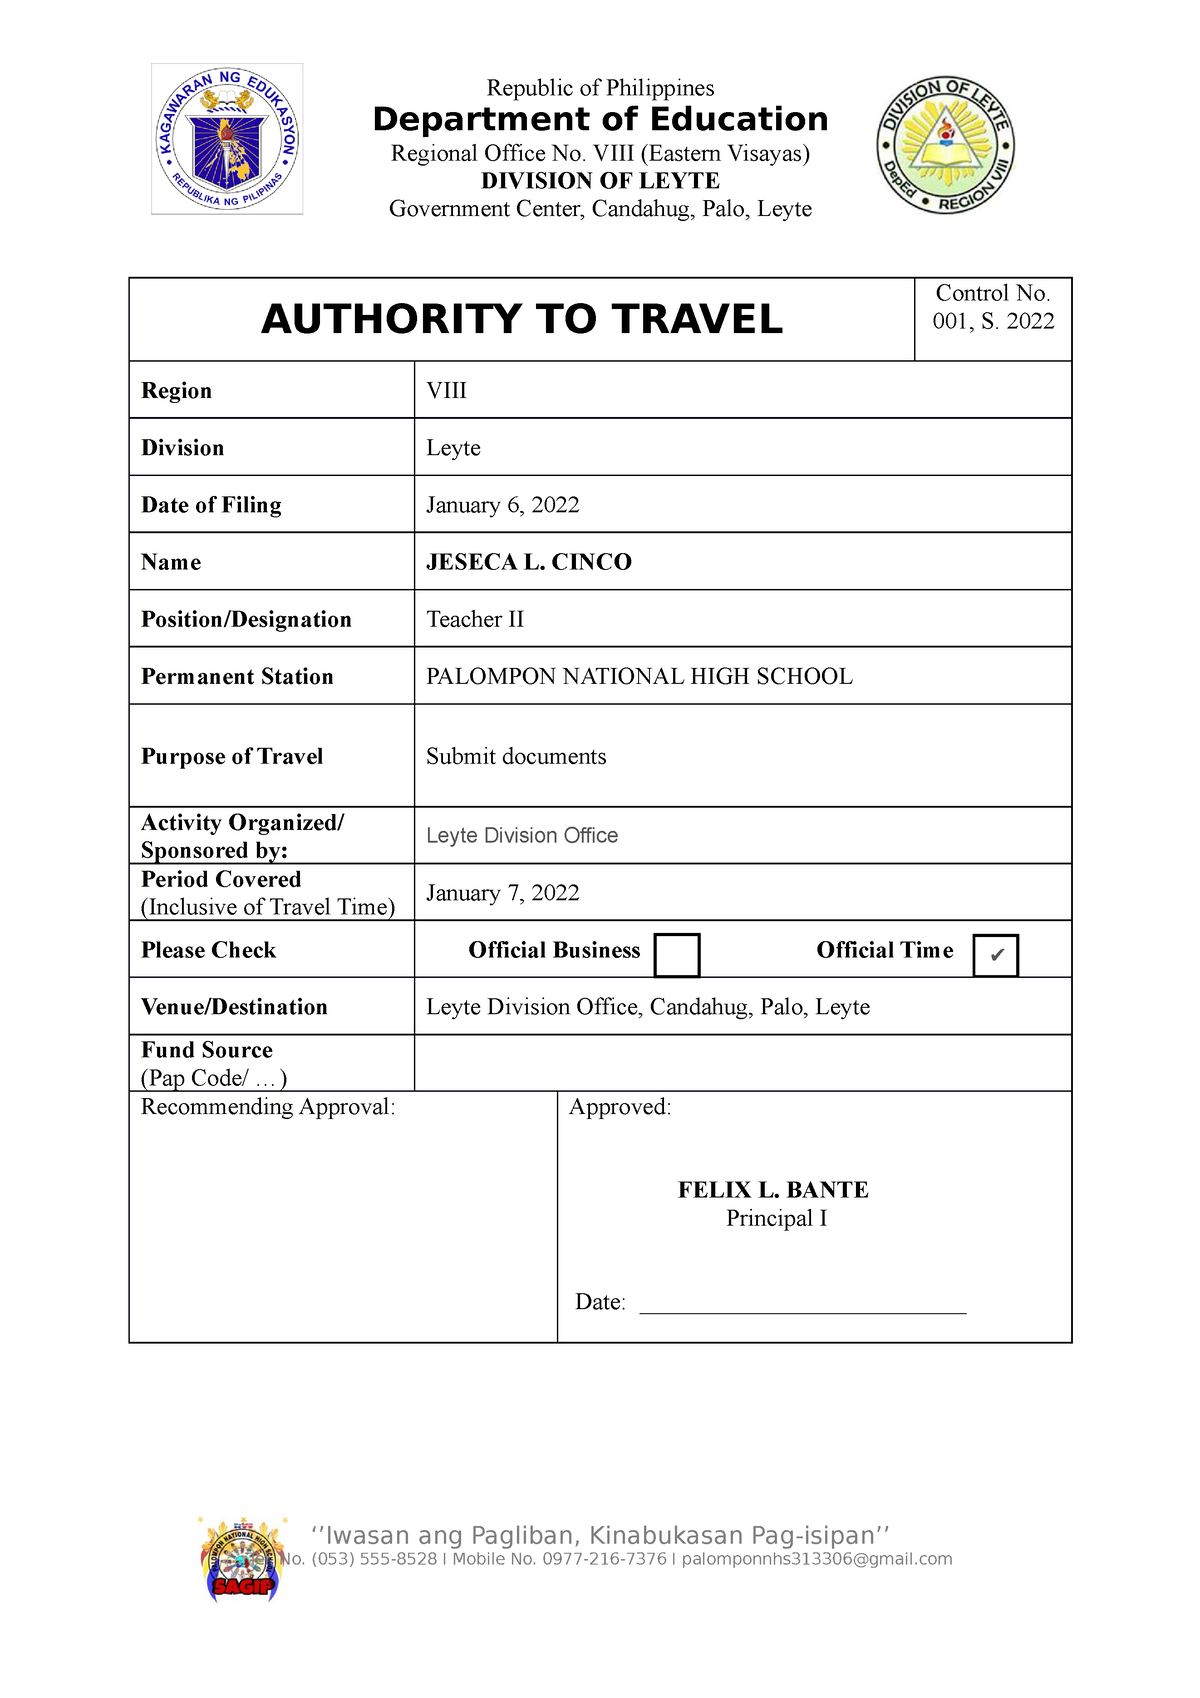 travel order philippines